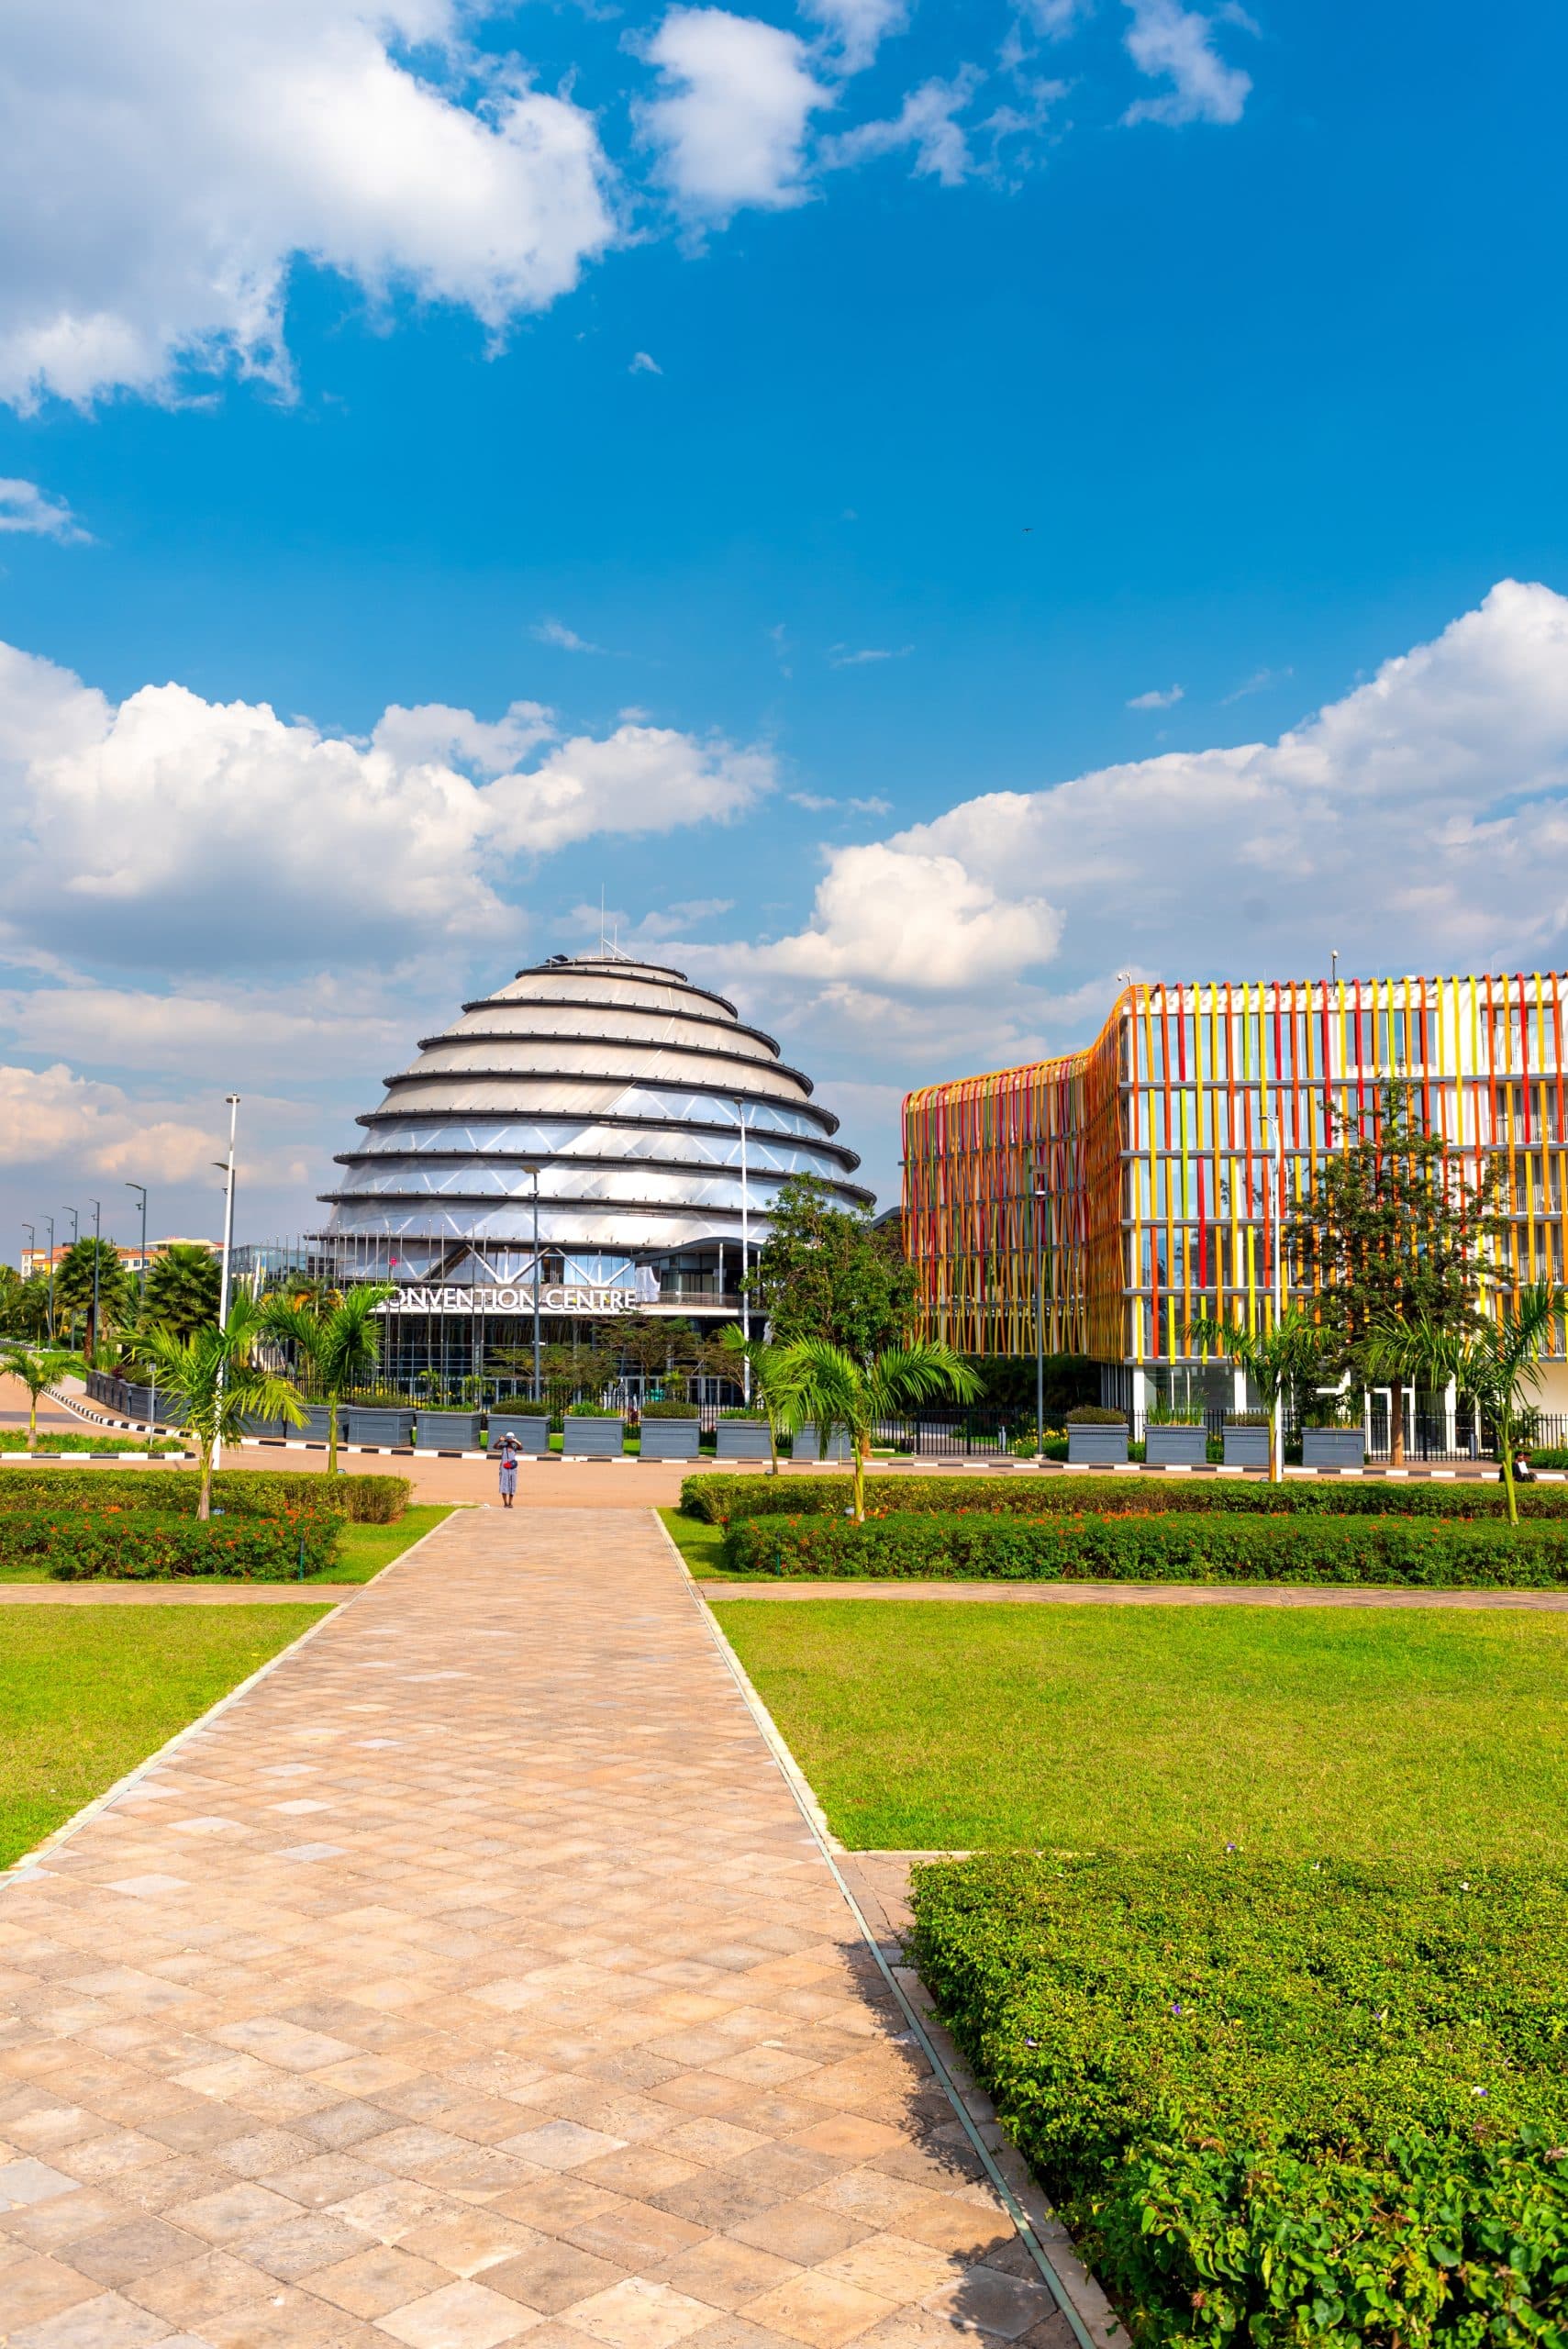 Kigali,,Rwanda, ,August,19,2022:,Kigali,Convention,Centre,On